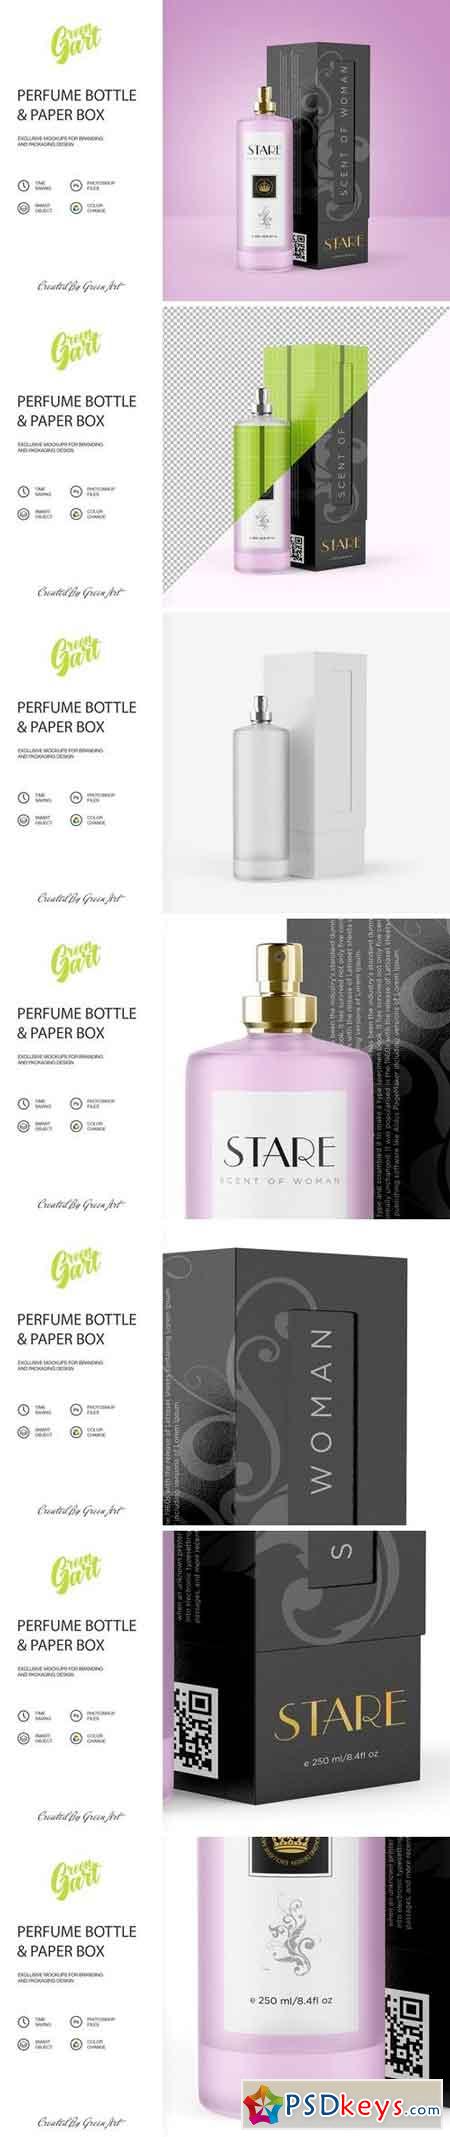 Perfume Bottle & Paper Box Mockup 2238805